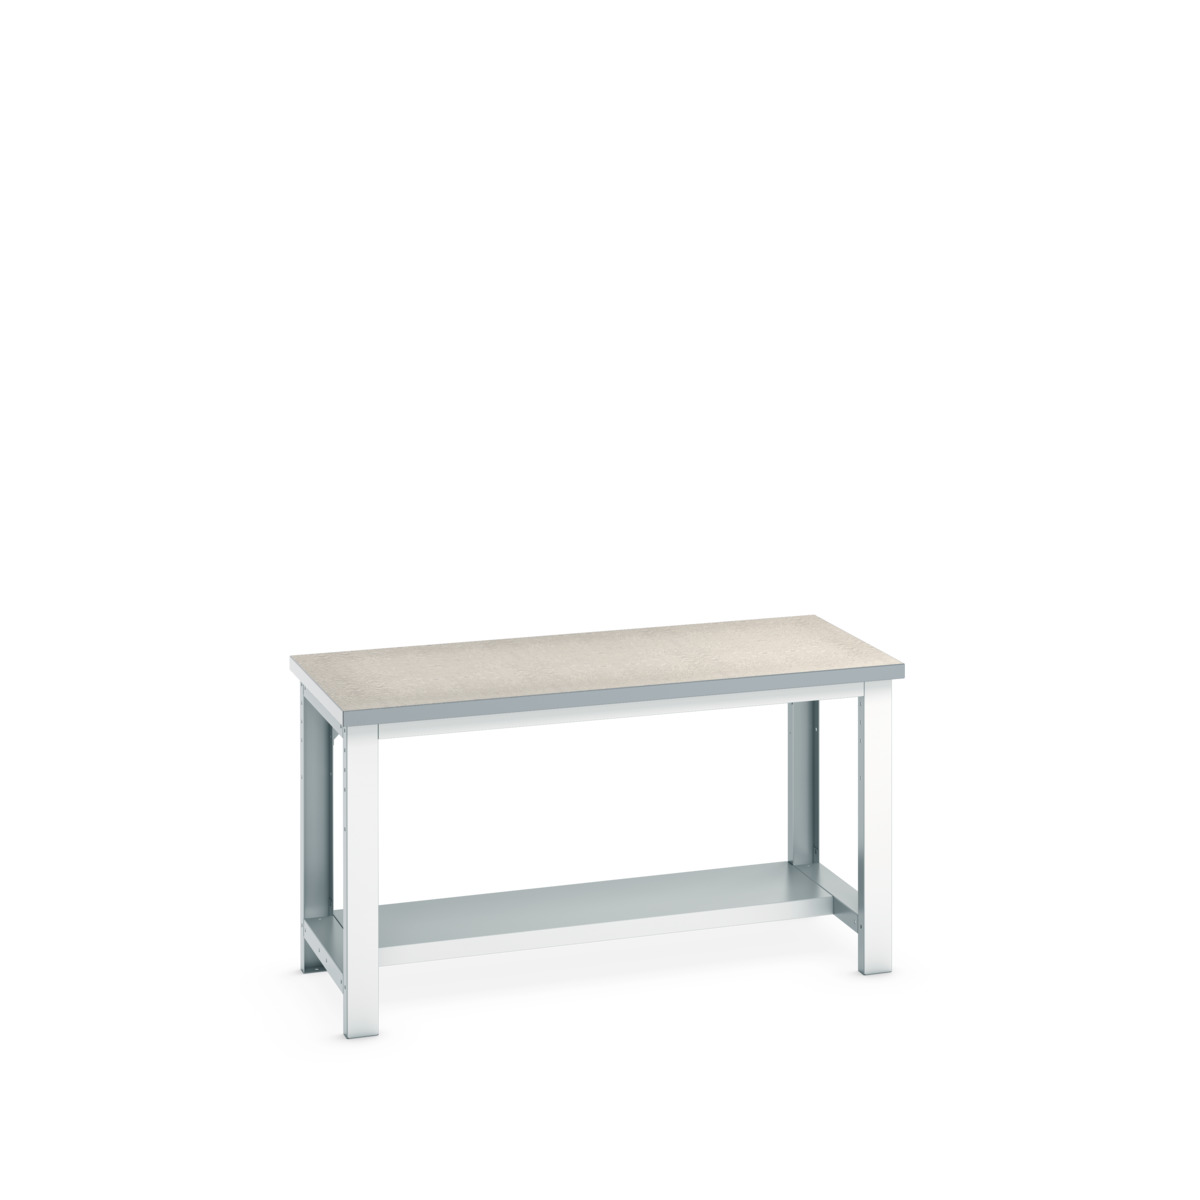 41003087. - cubio framework bench (lino)